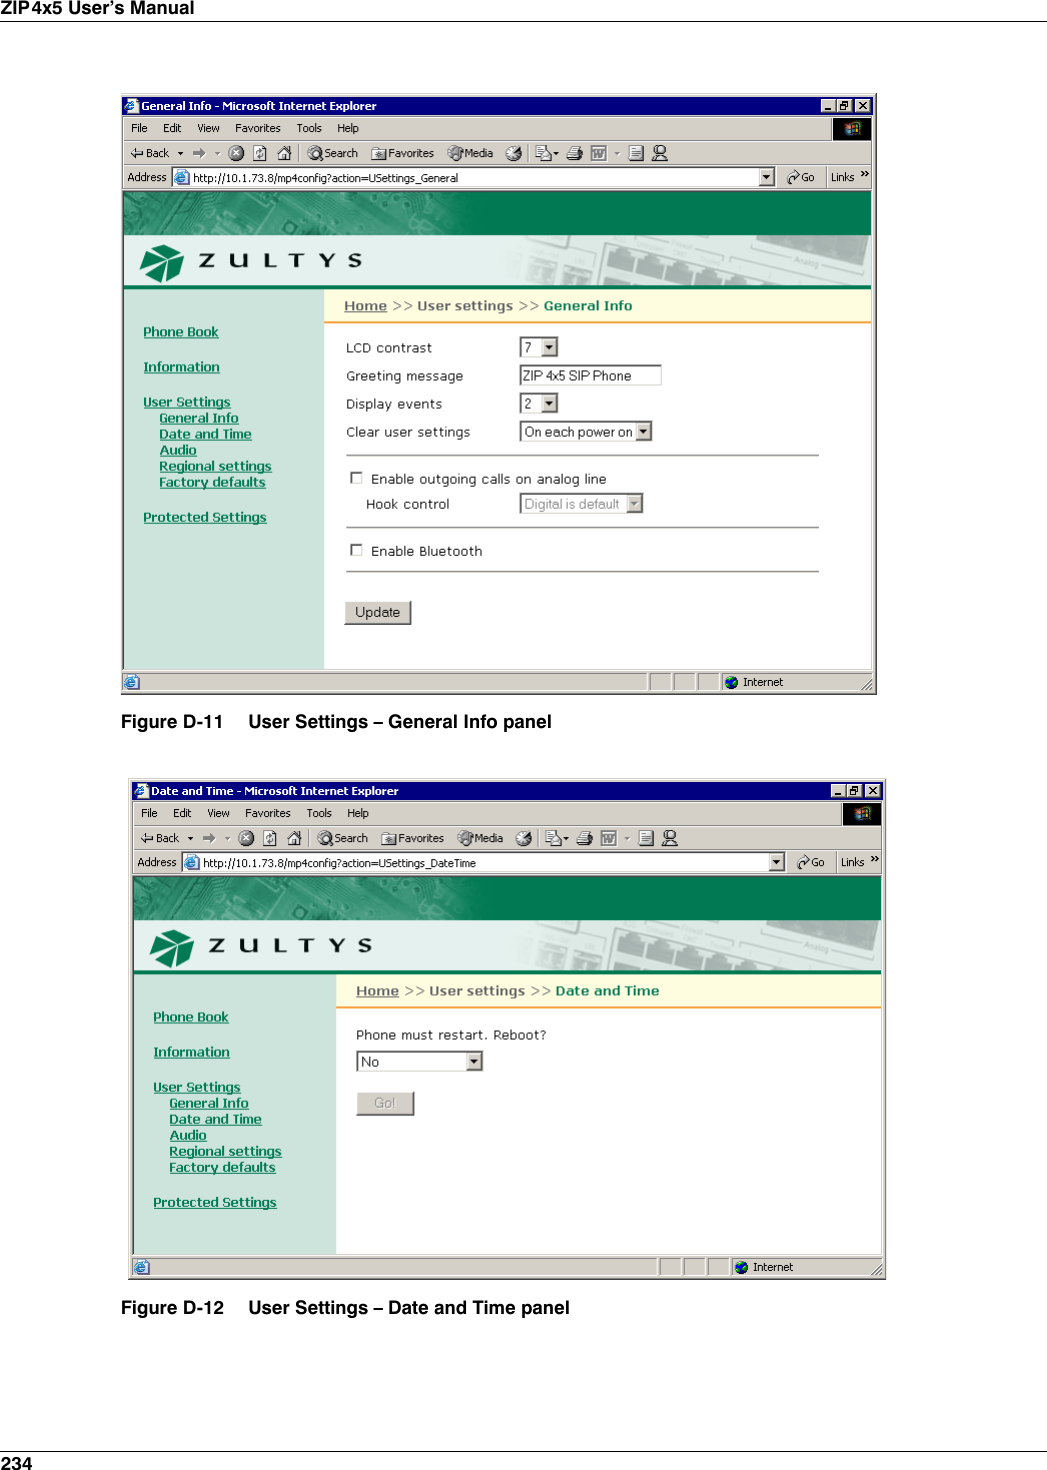 234ZIP4x5 User’s ManualFigure D-11 User Settings – General Info panelFigure D-12 User Settings – Date and Time panel